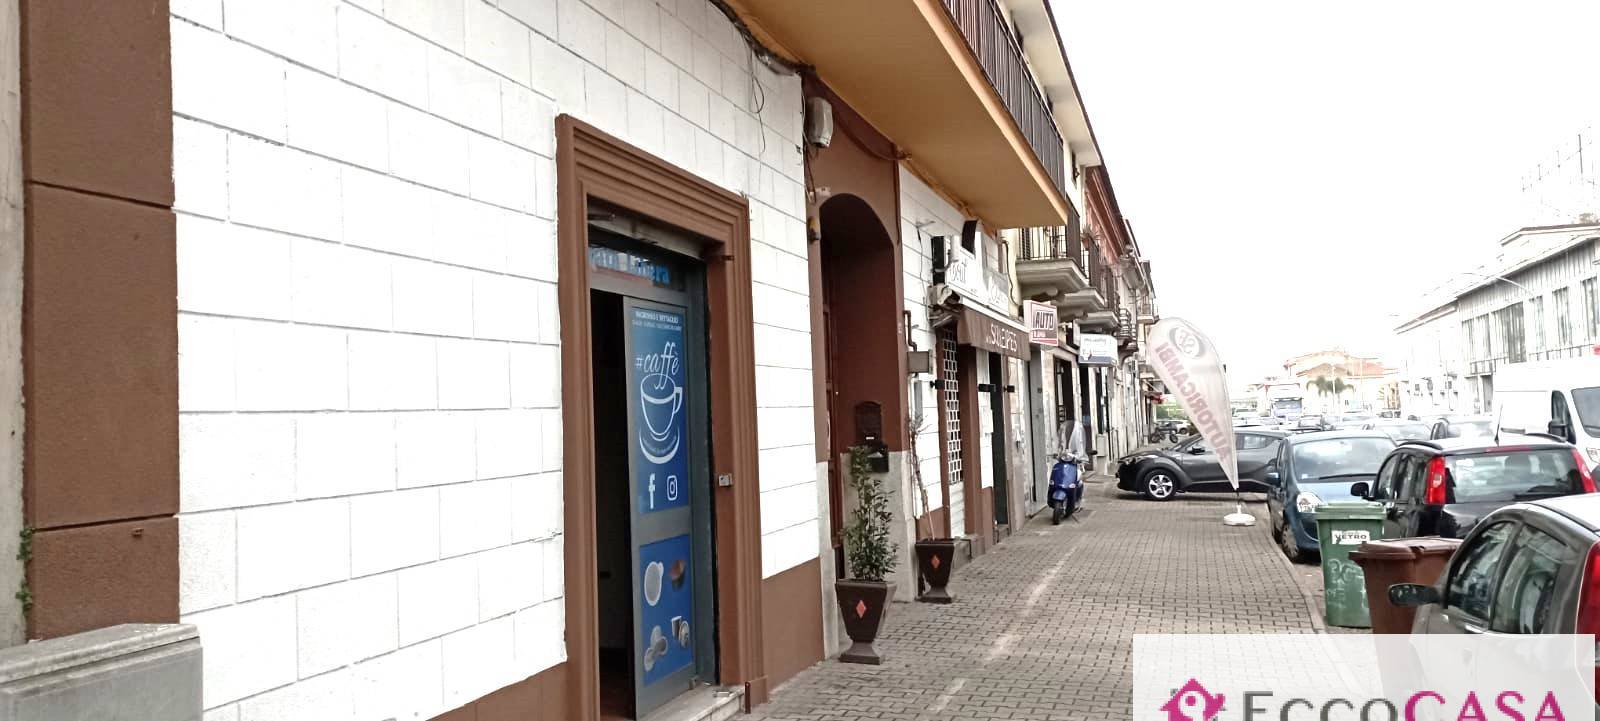 Locale commerciale in affitto a Casagiove